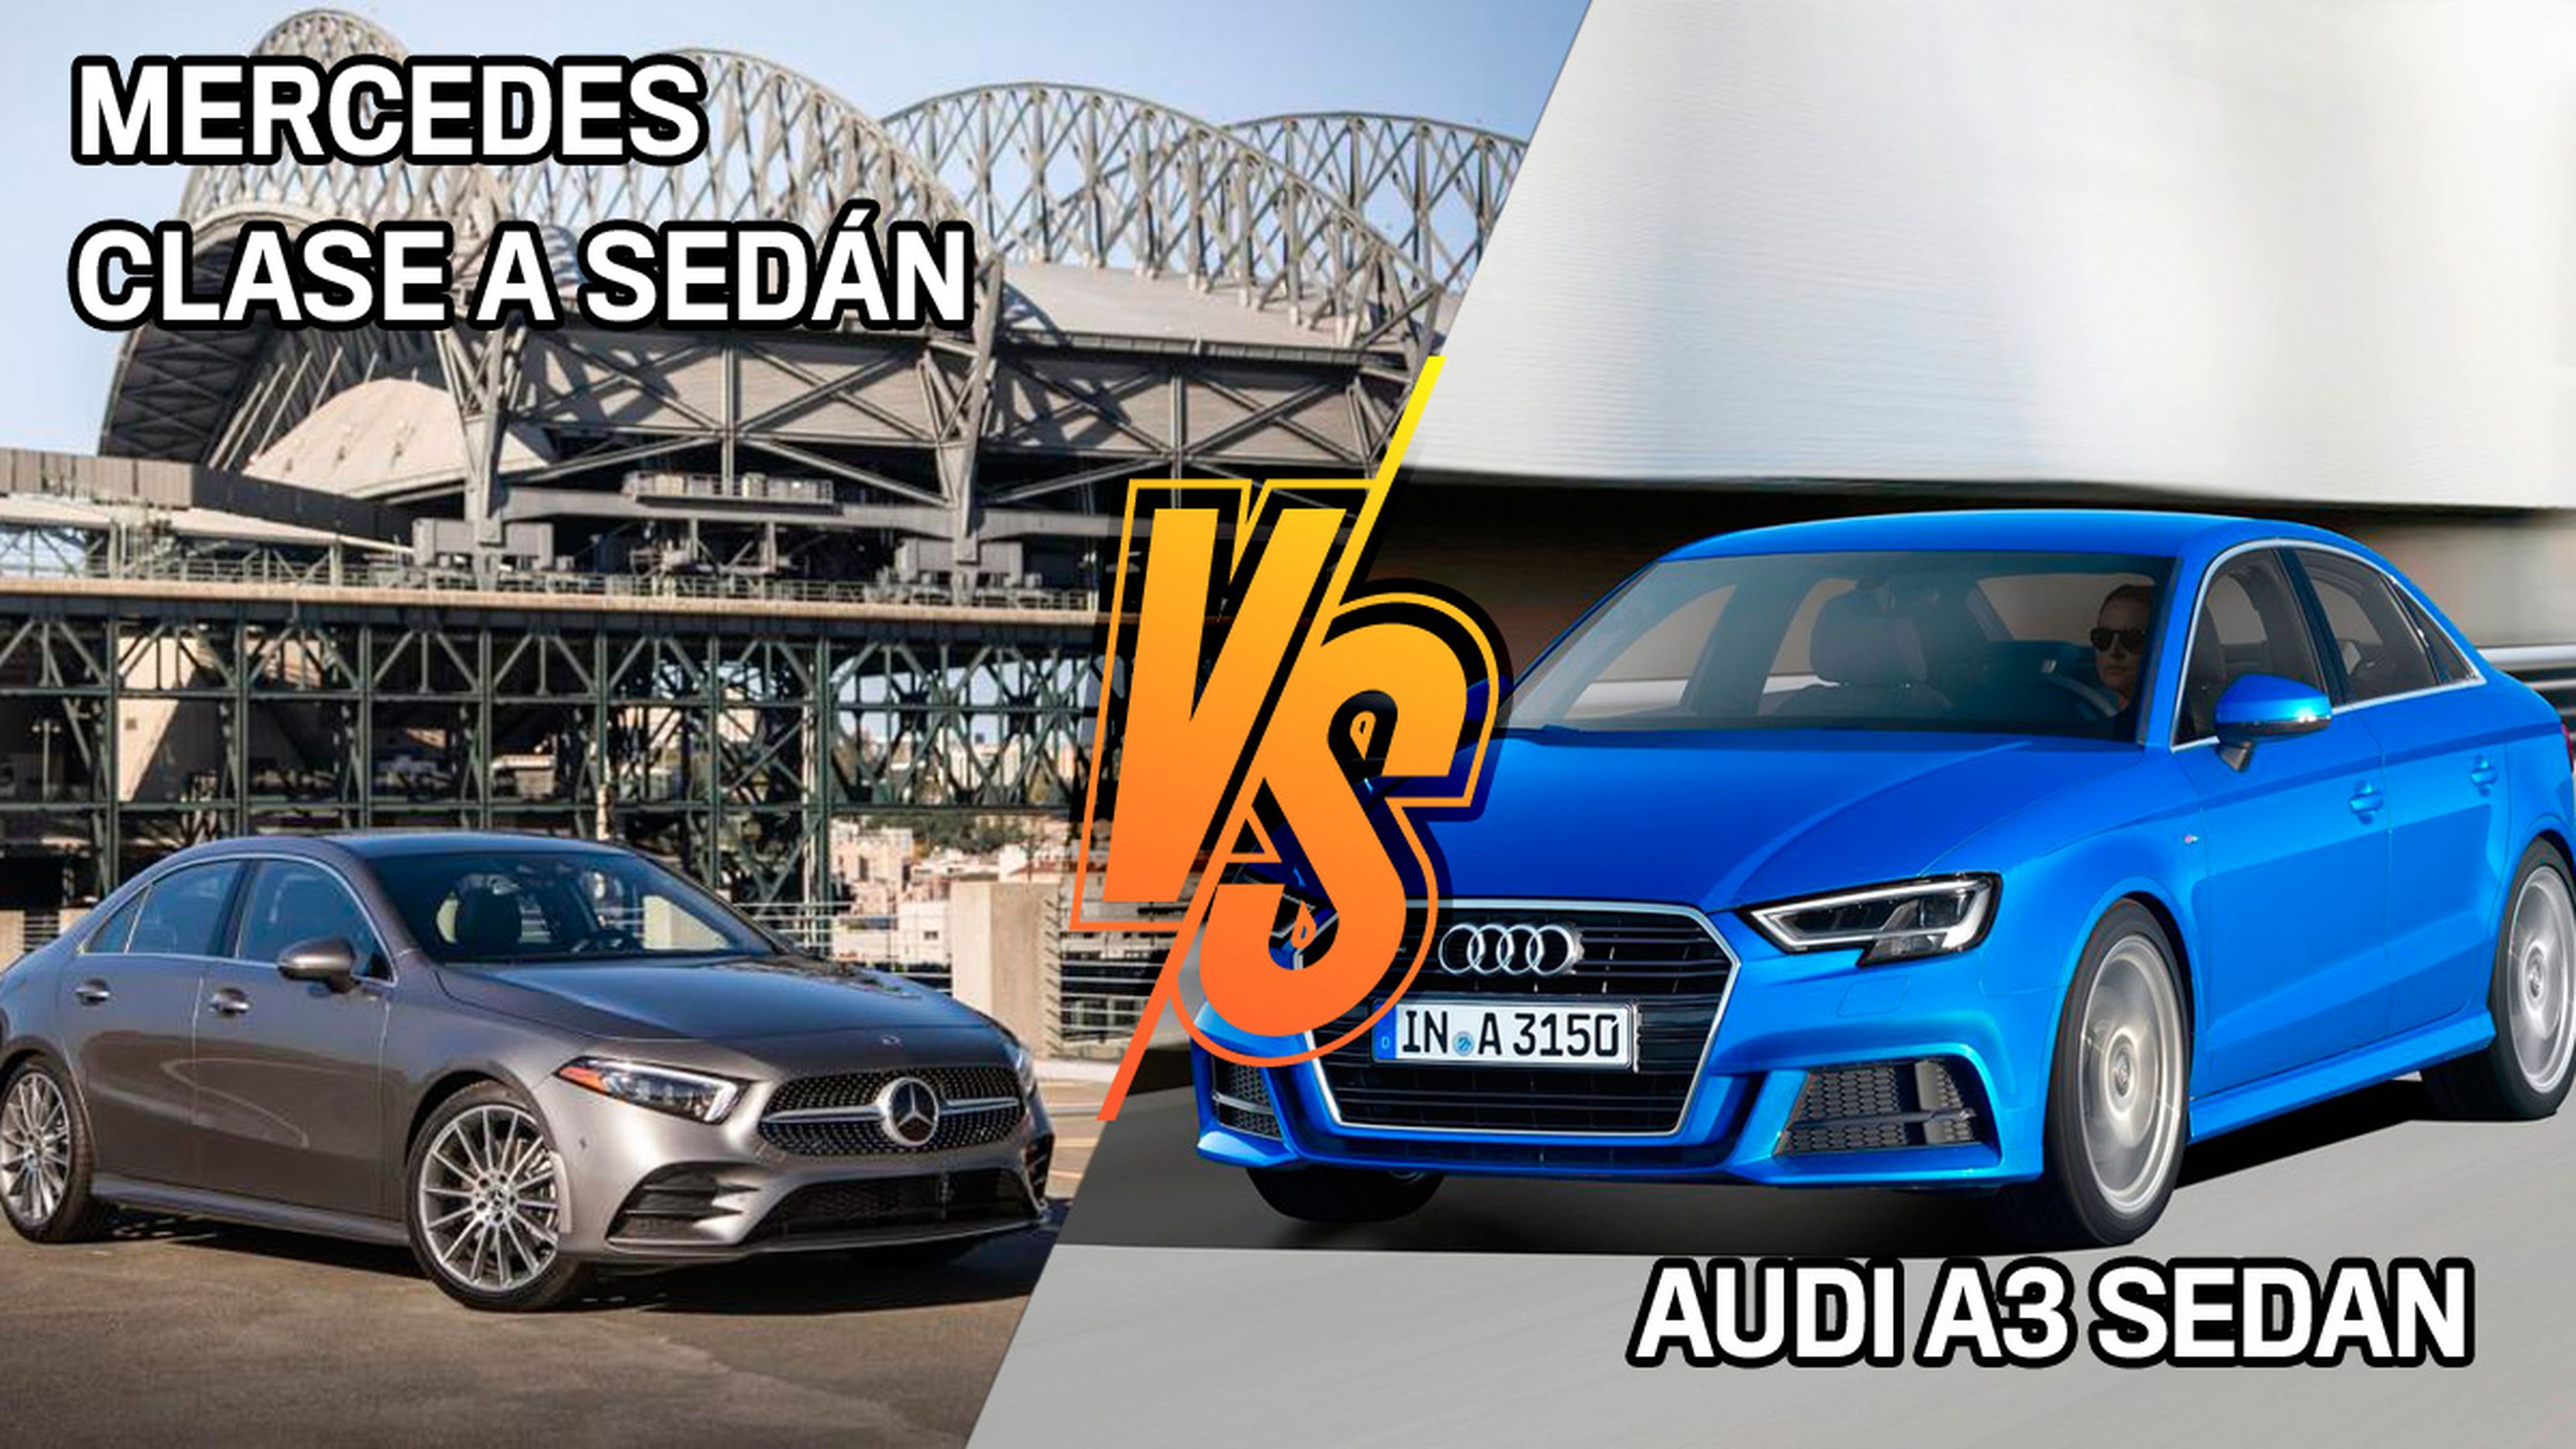 Mercedes Clase A Sedan o Audi A3 Sedan, ¿cuál es mejor?